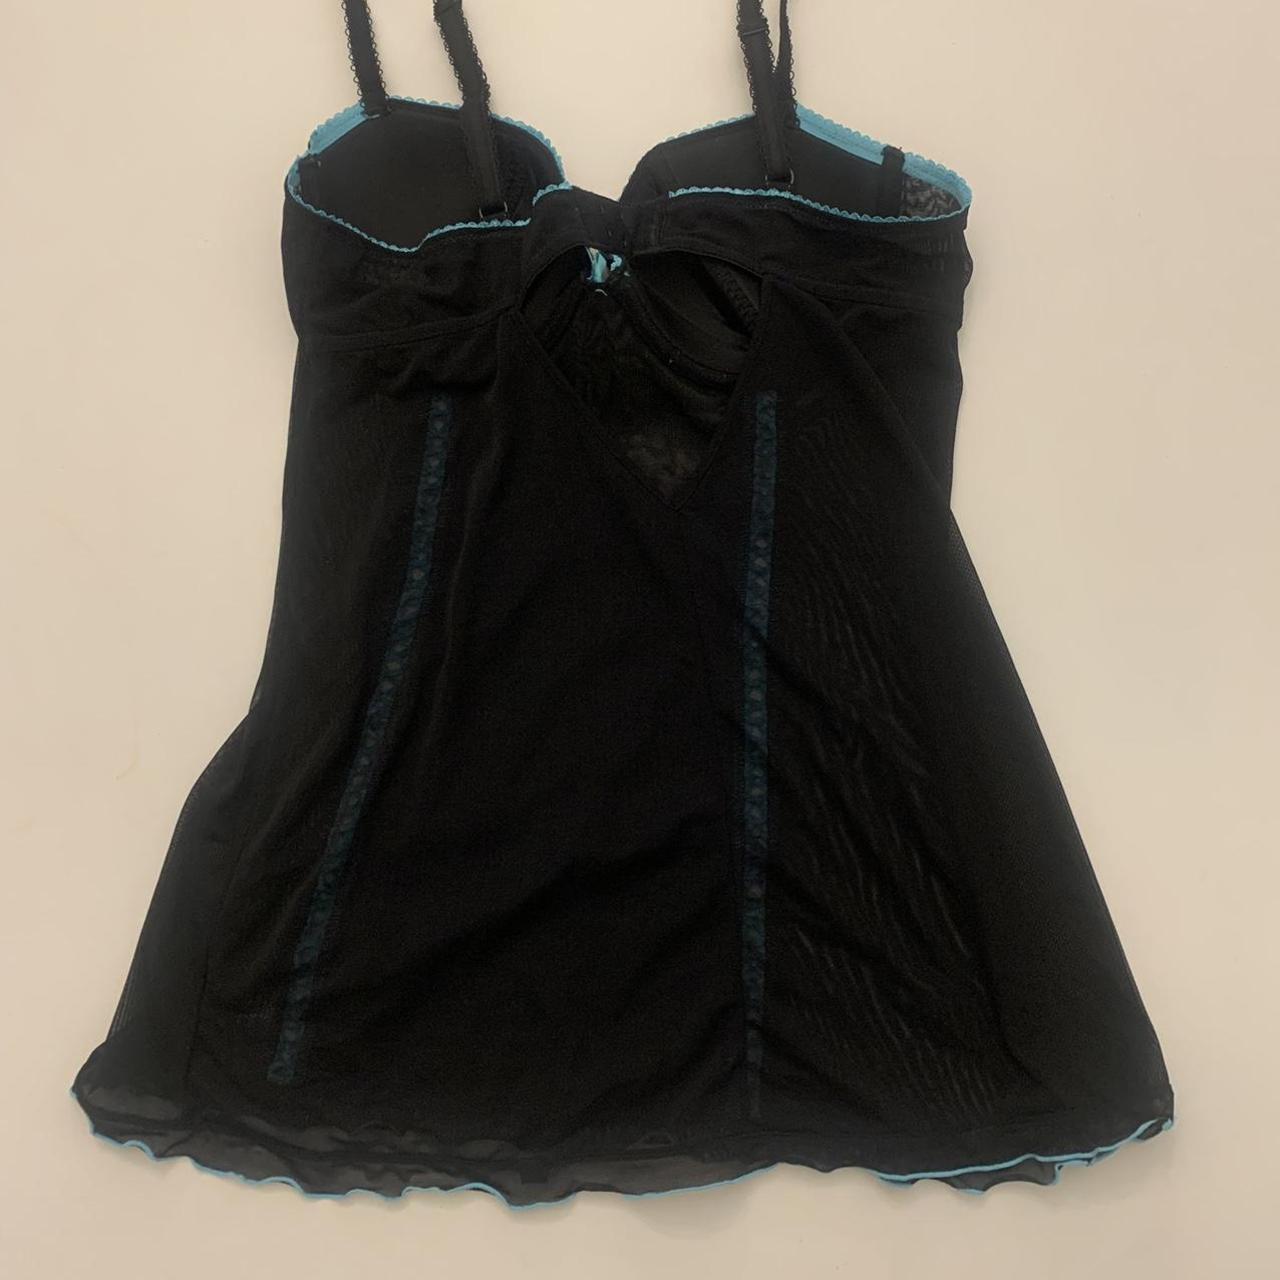 La Senza Women's Black and Blue Dress | Depop